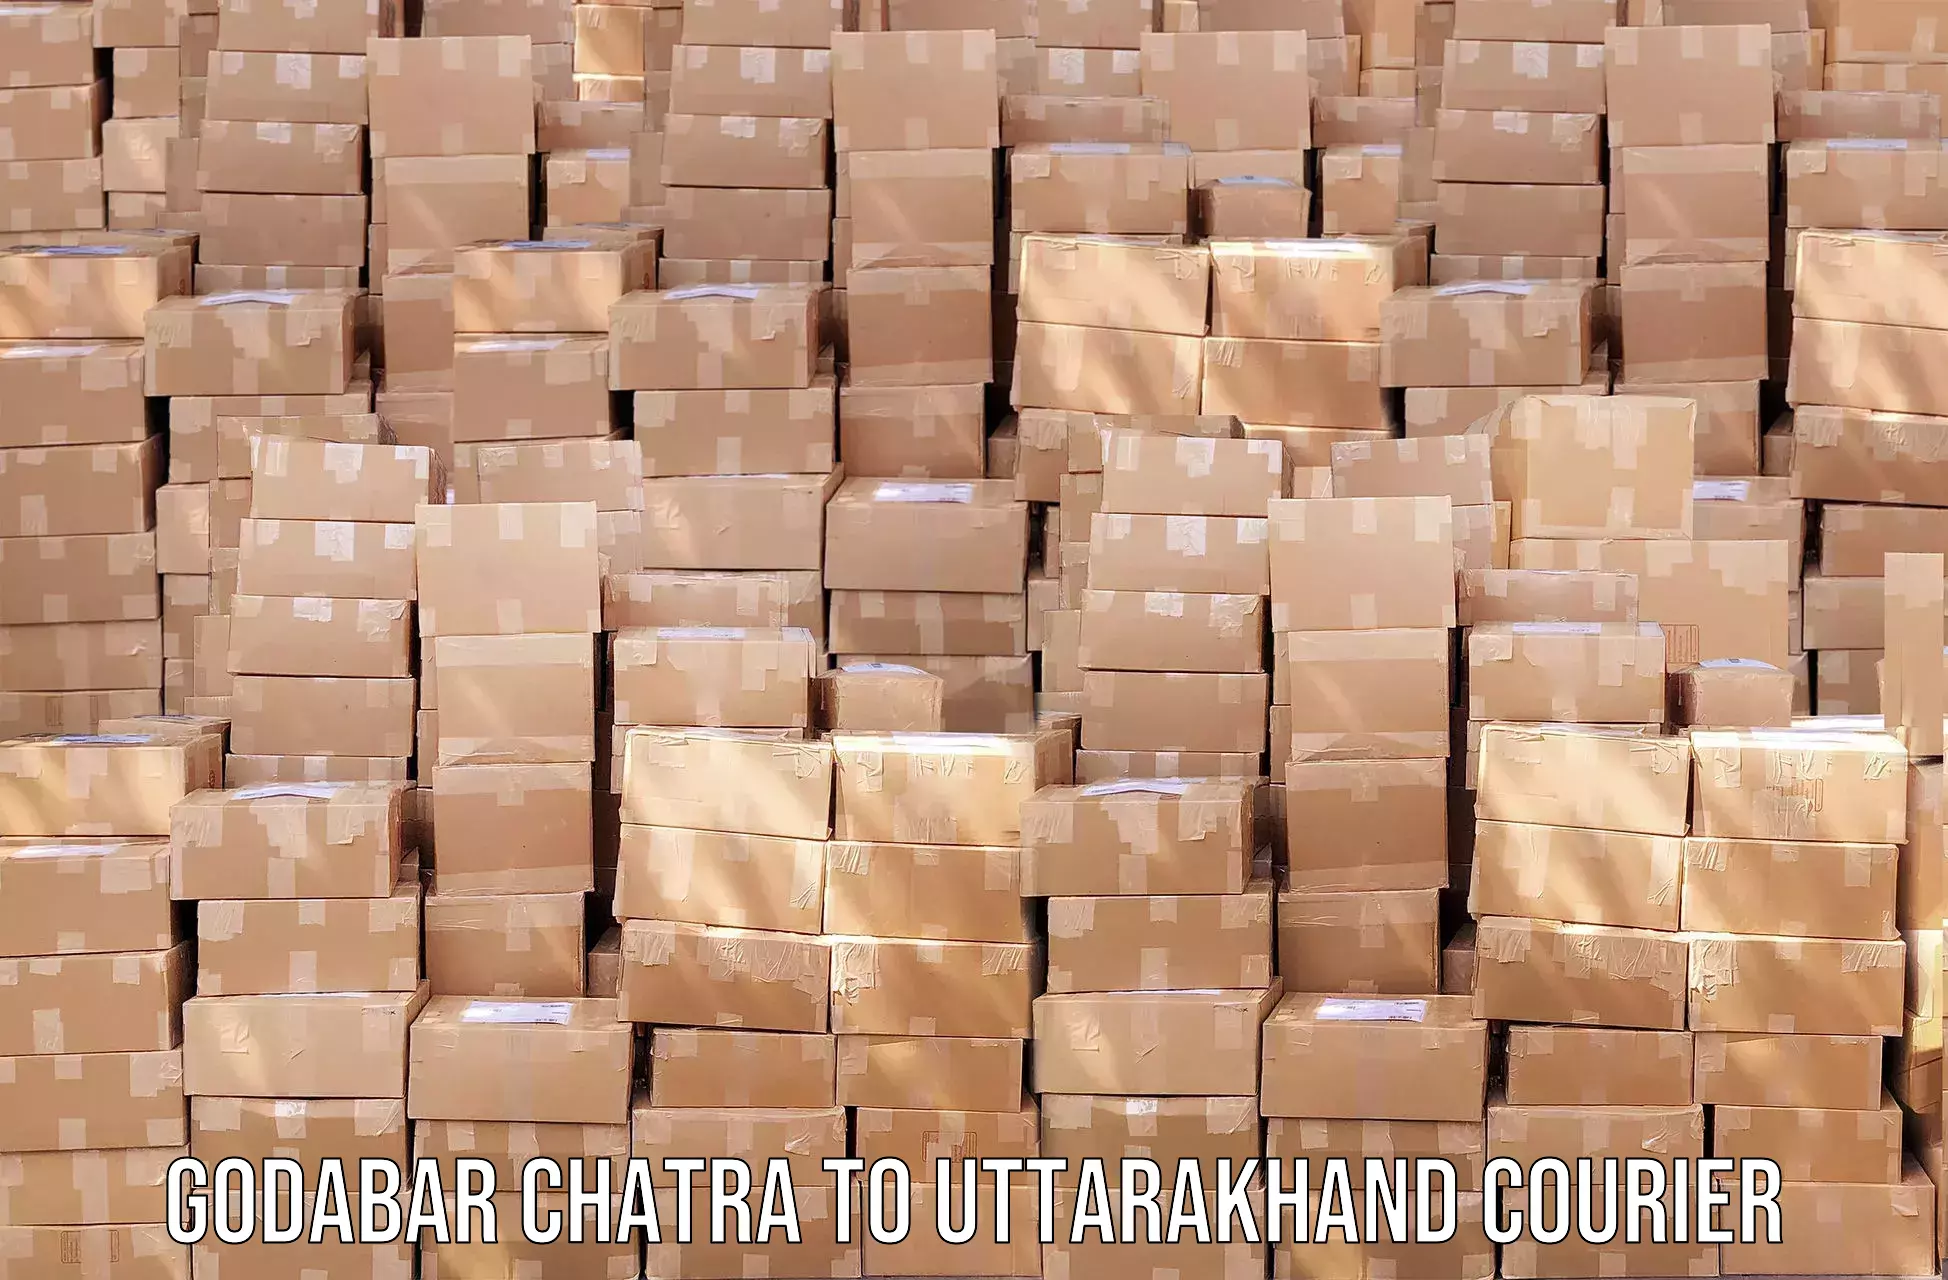 Professional parcel services Godabar Chatra to Almora